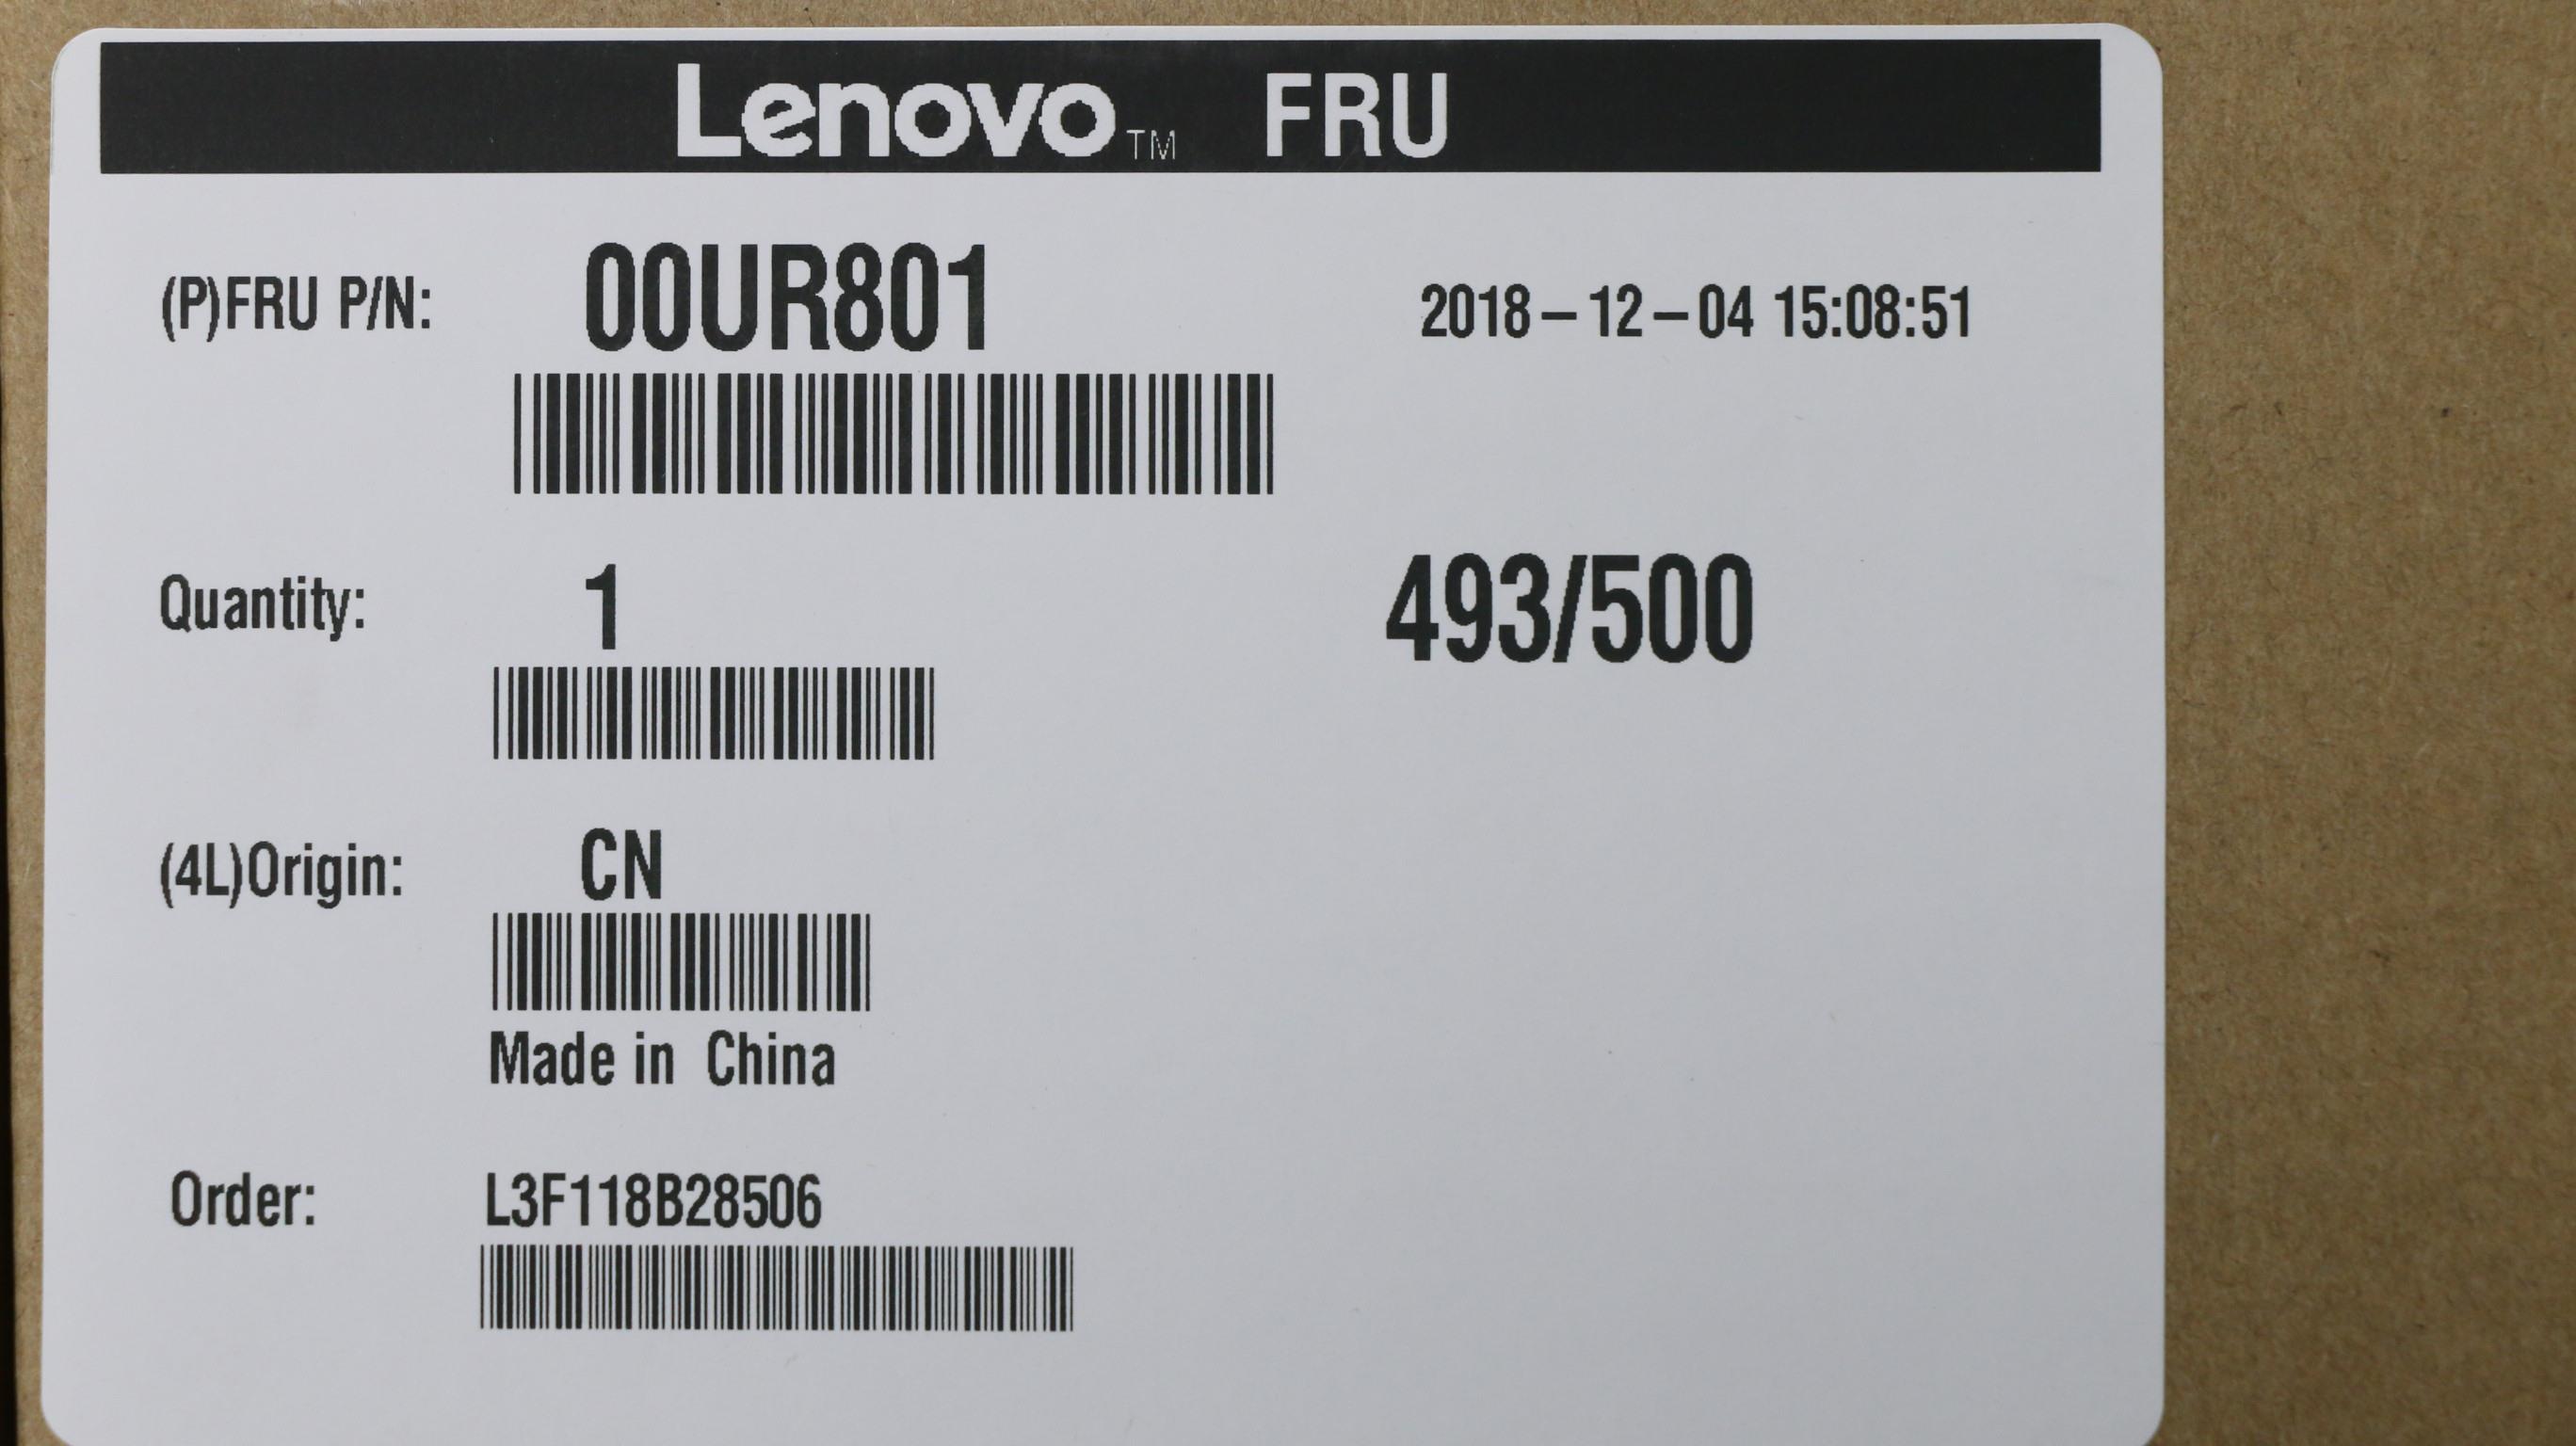 Lenovo ThinkPad P50 Bottom Cover 00UR801